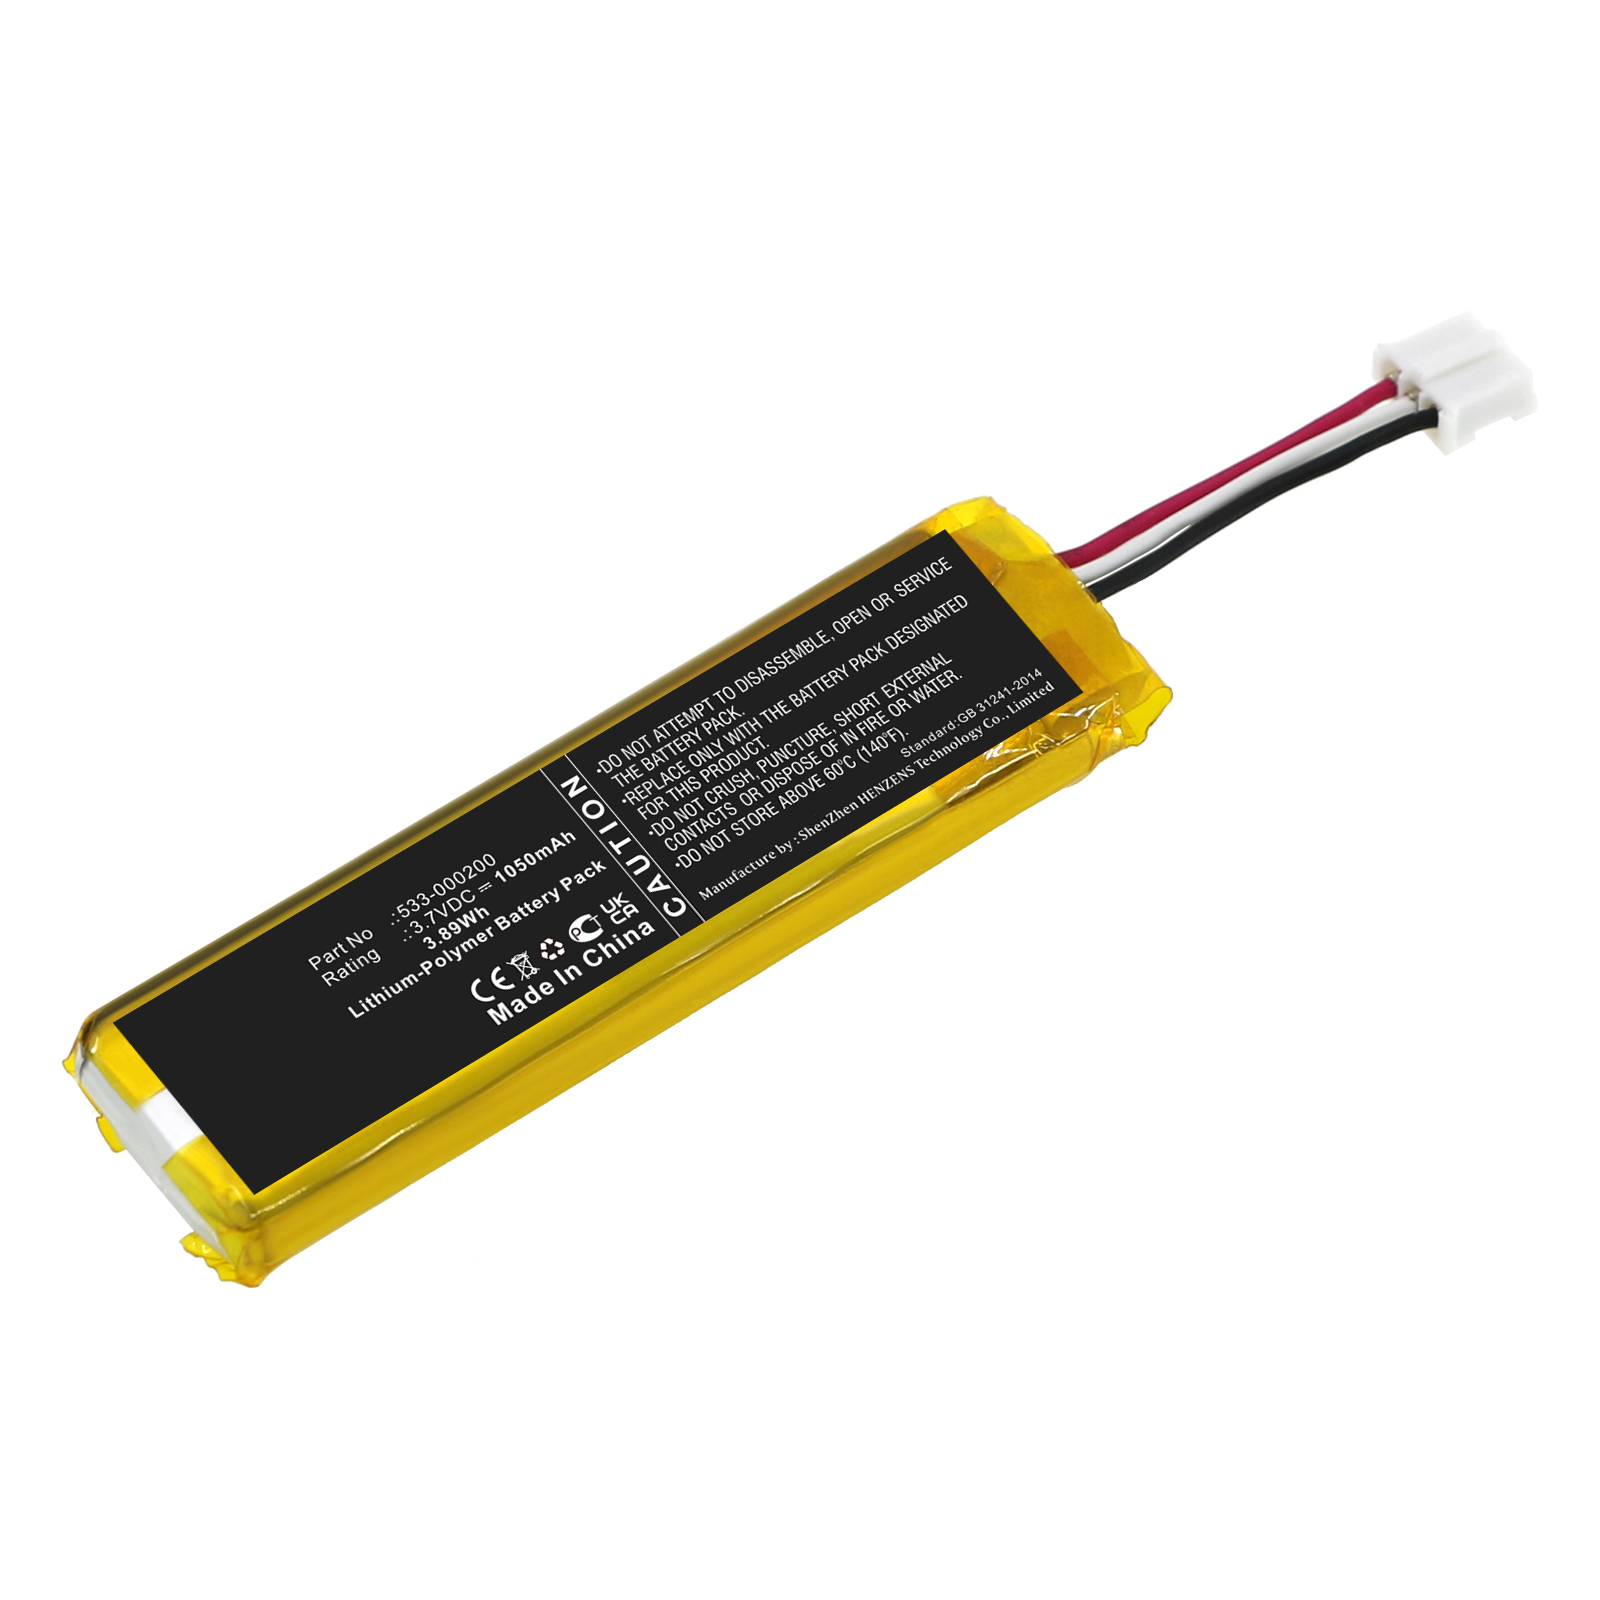 Synergy Digital Keyboard Battery, Compatible with Logitech 533-000200 Keyboard Battery (Li-Pol, 3.7V, 1050mAh)